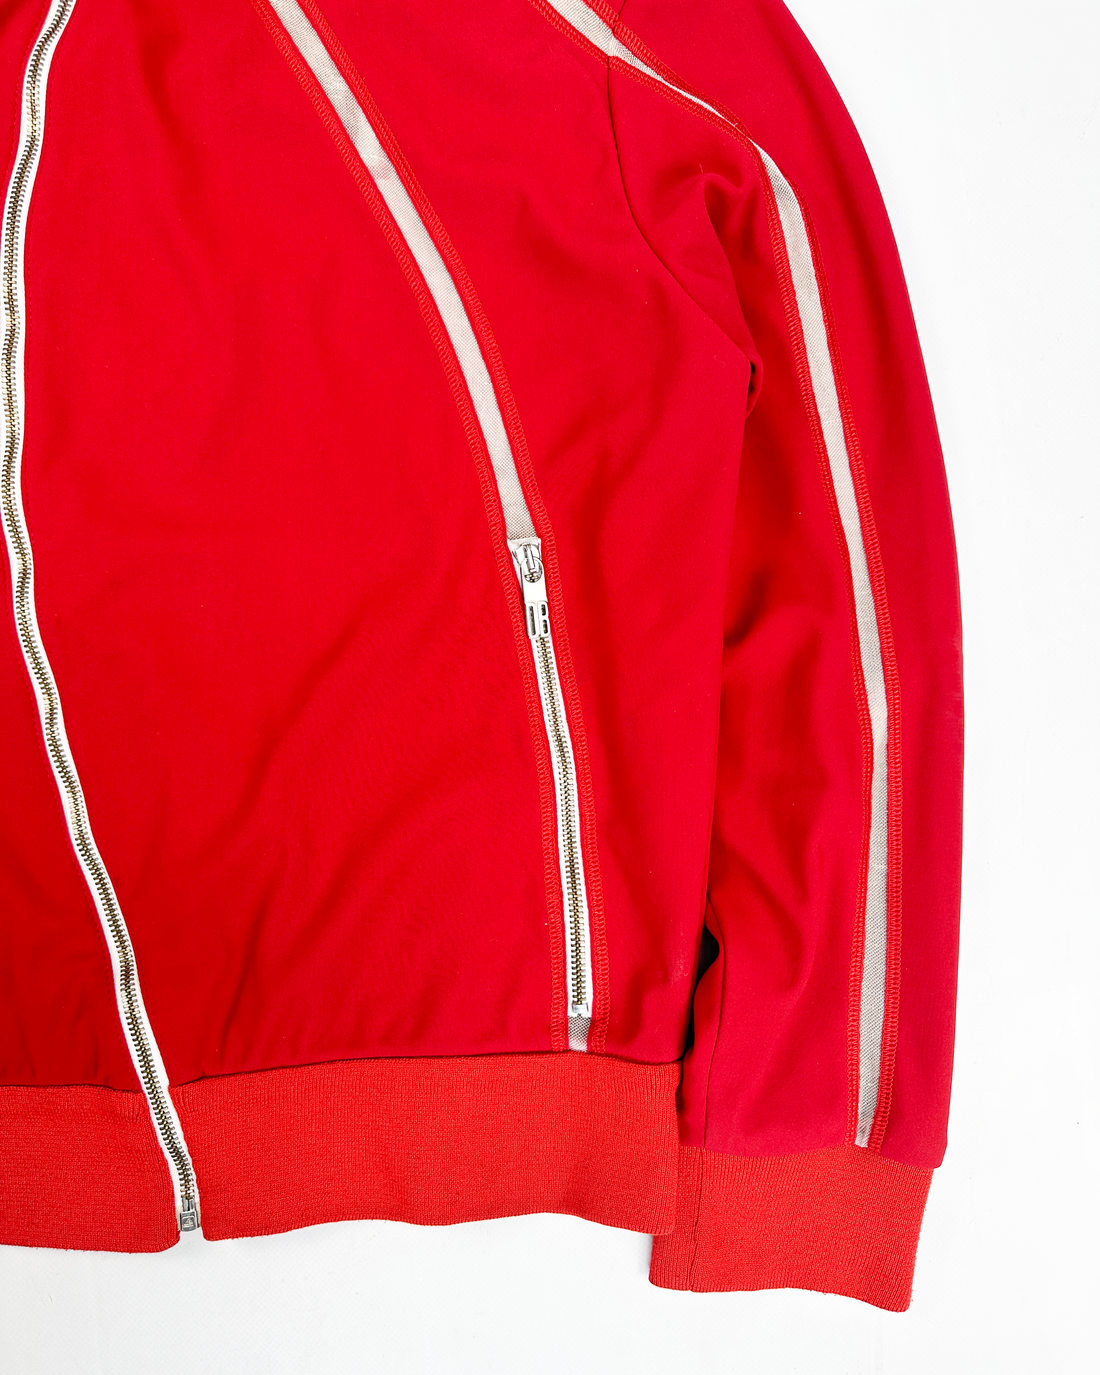 Dirk Bikkembergs Red Curved Zip Jacket 2000's